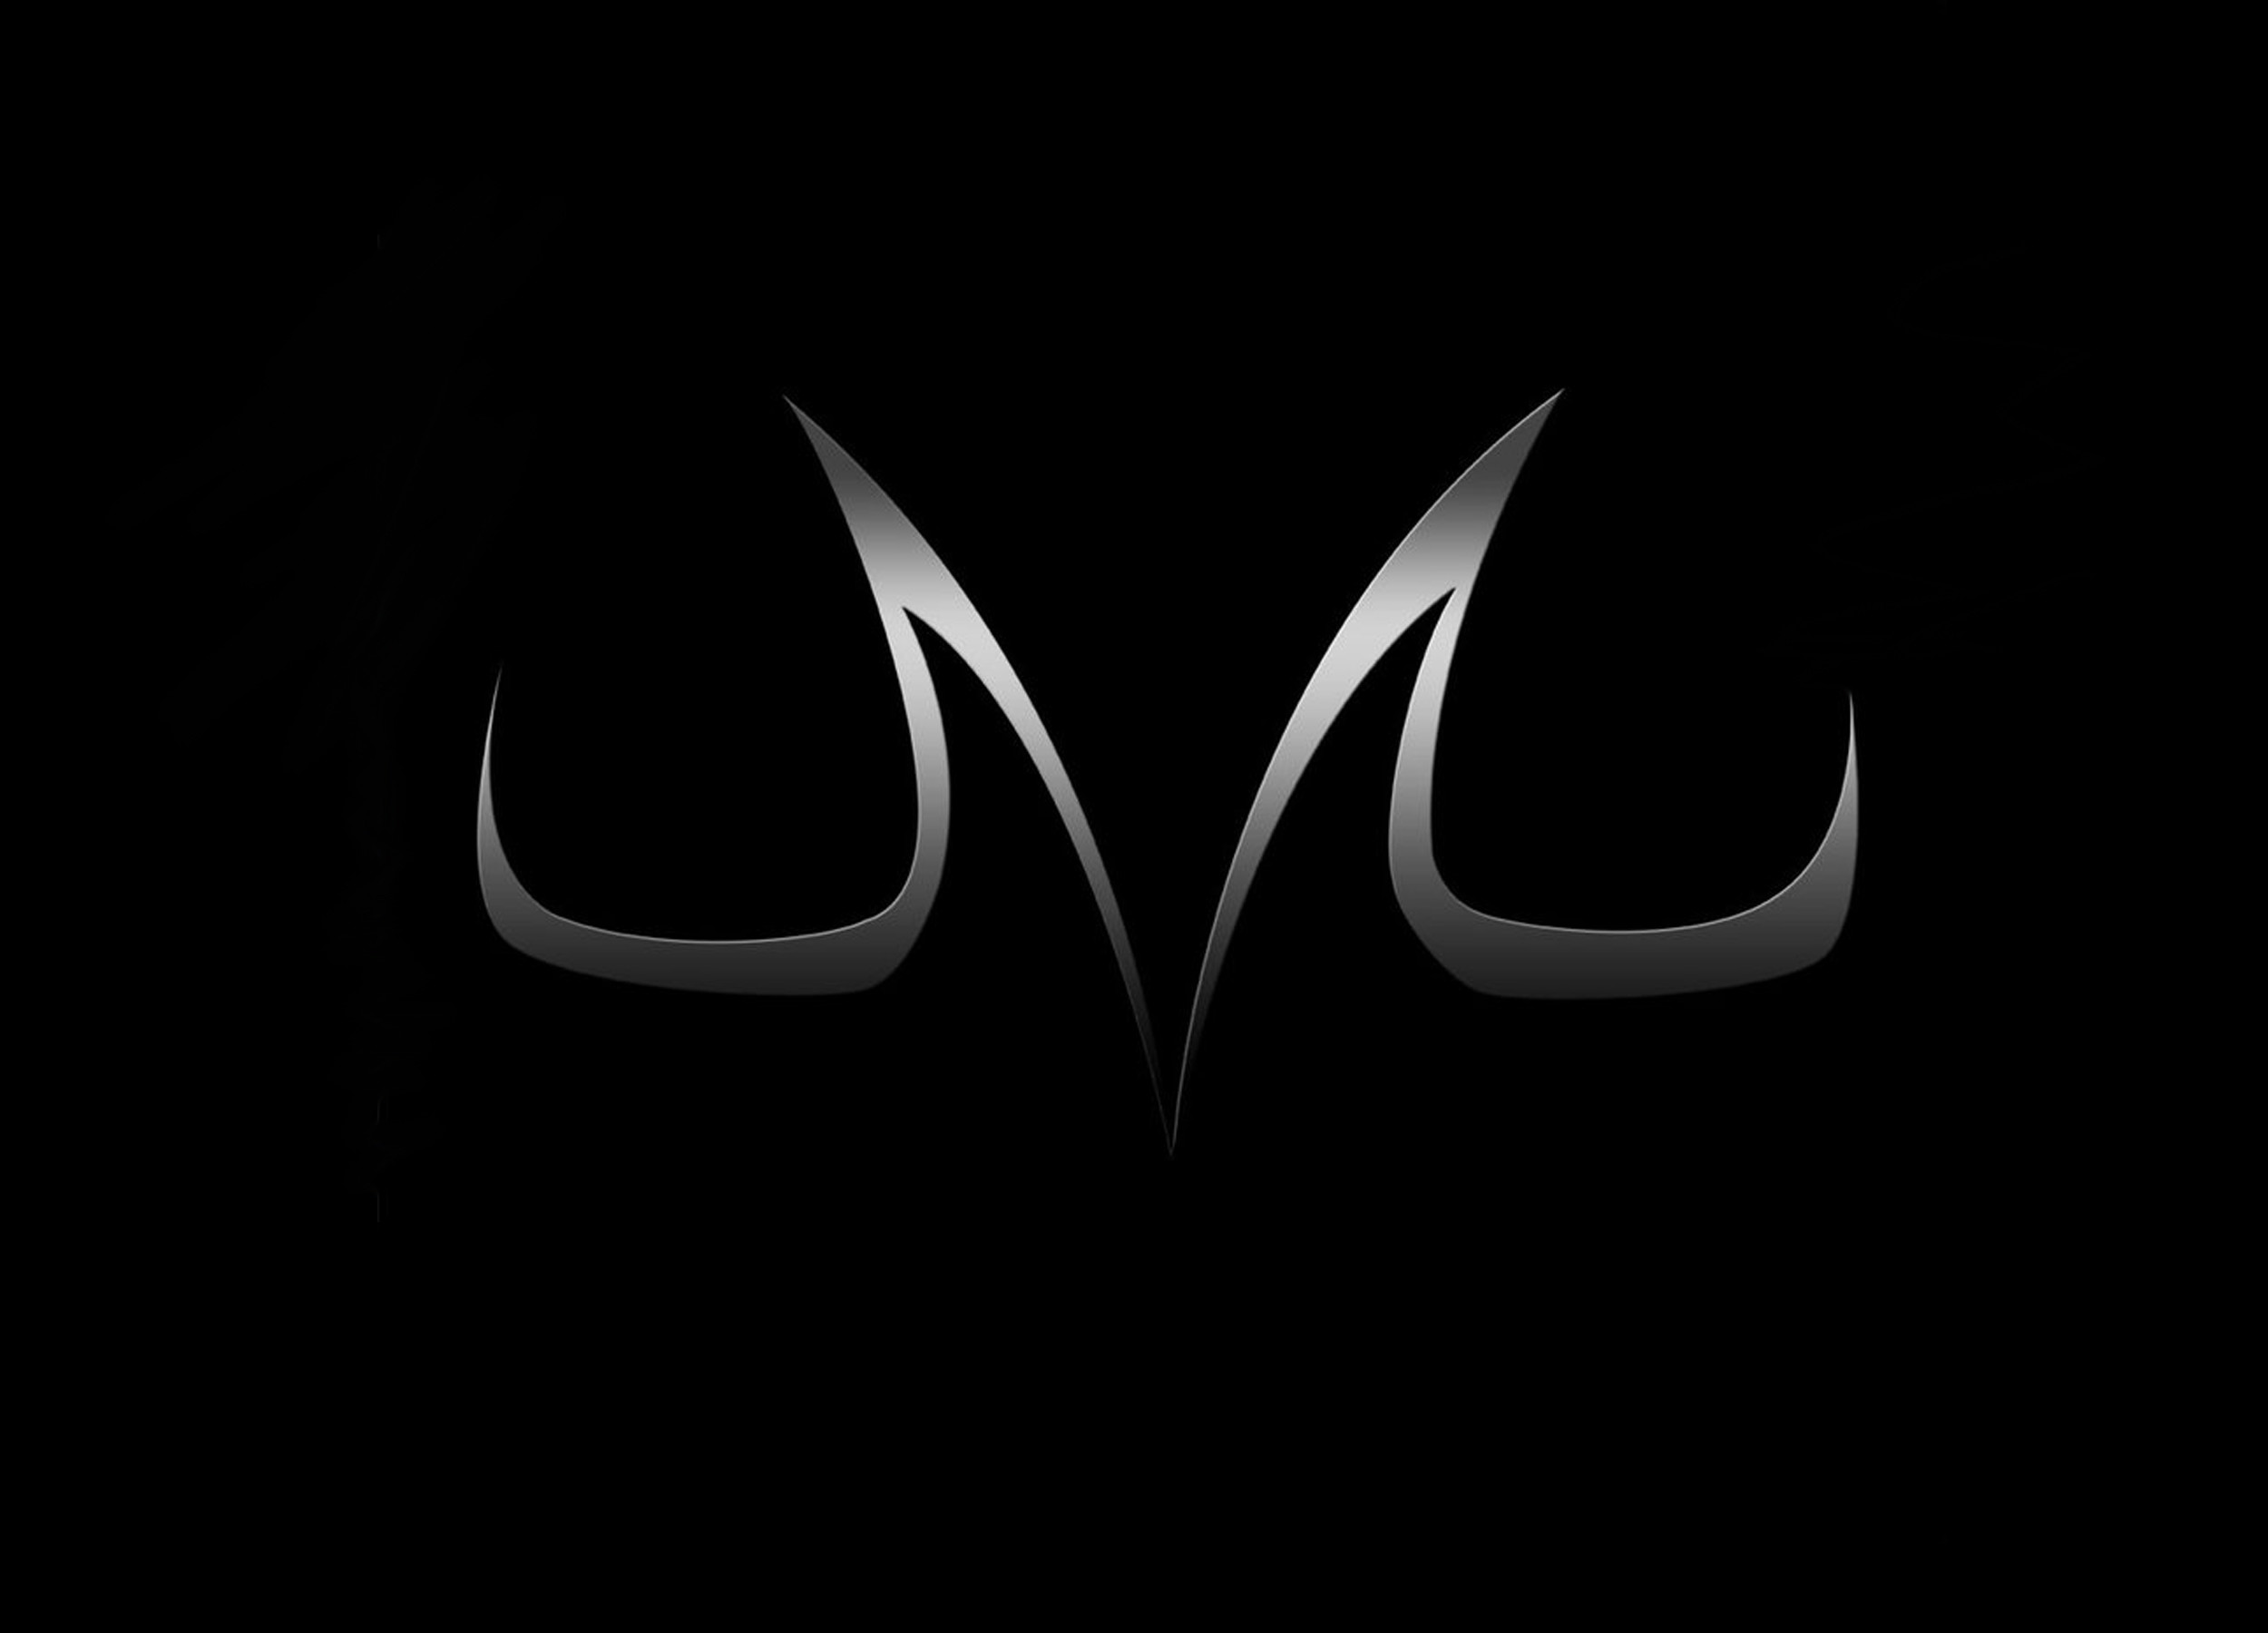 xp_black, Majin buu Logo Wallpaper – ForWallpaper.com